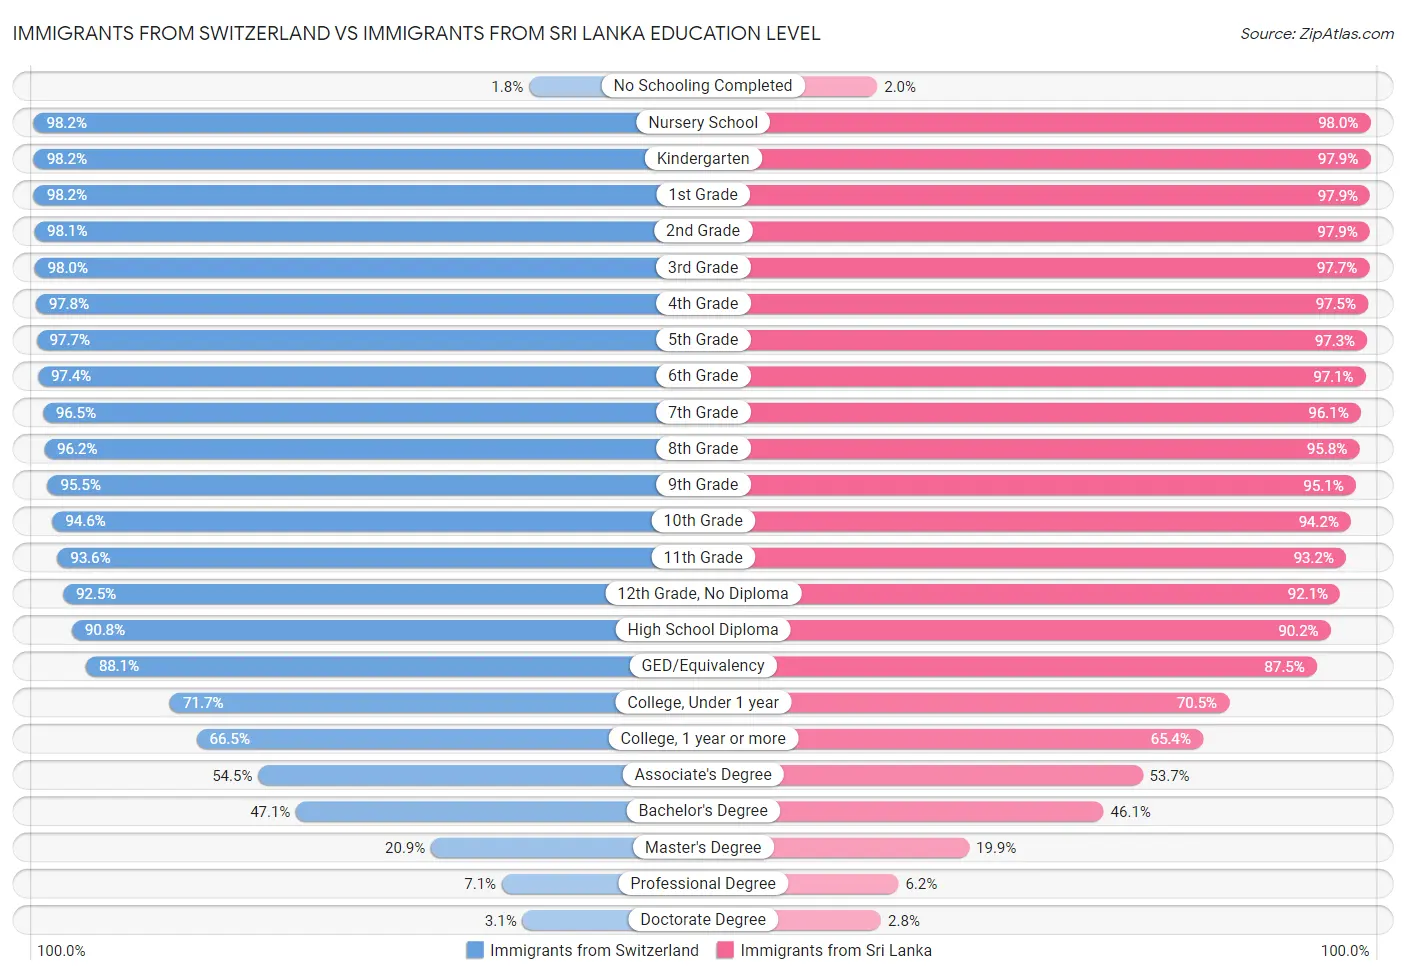 Immigrants from Switzerland vs Immigrants from Sri Lanka Education Level